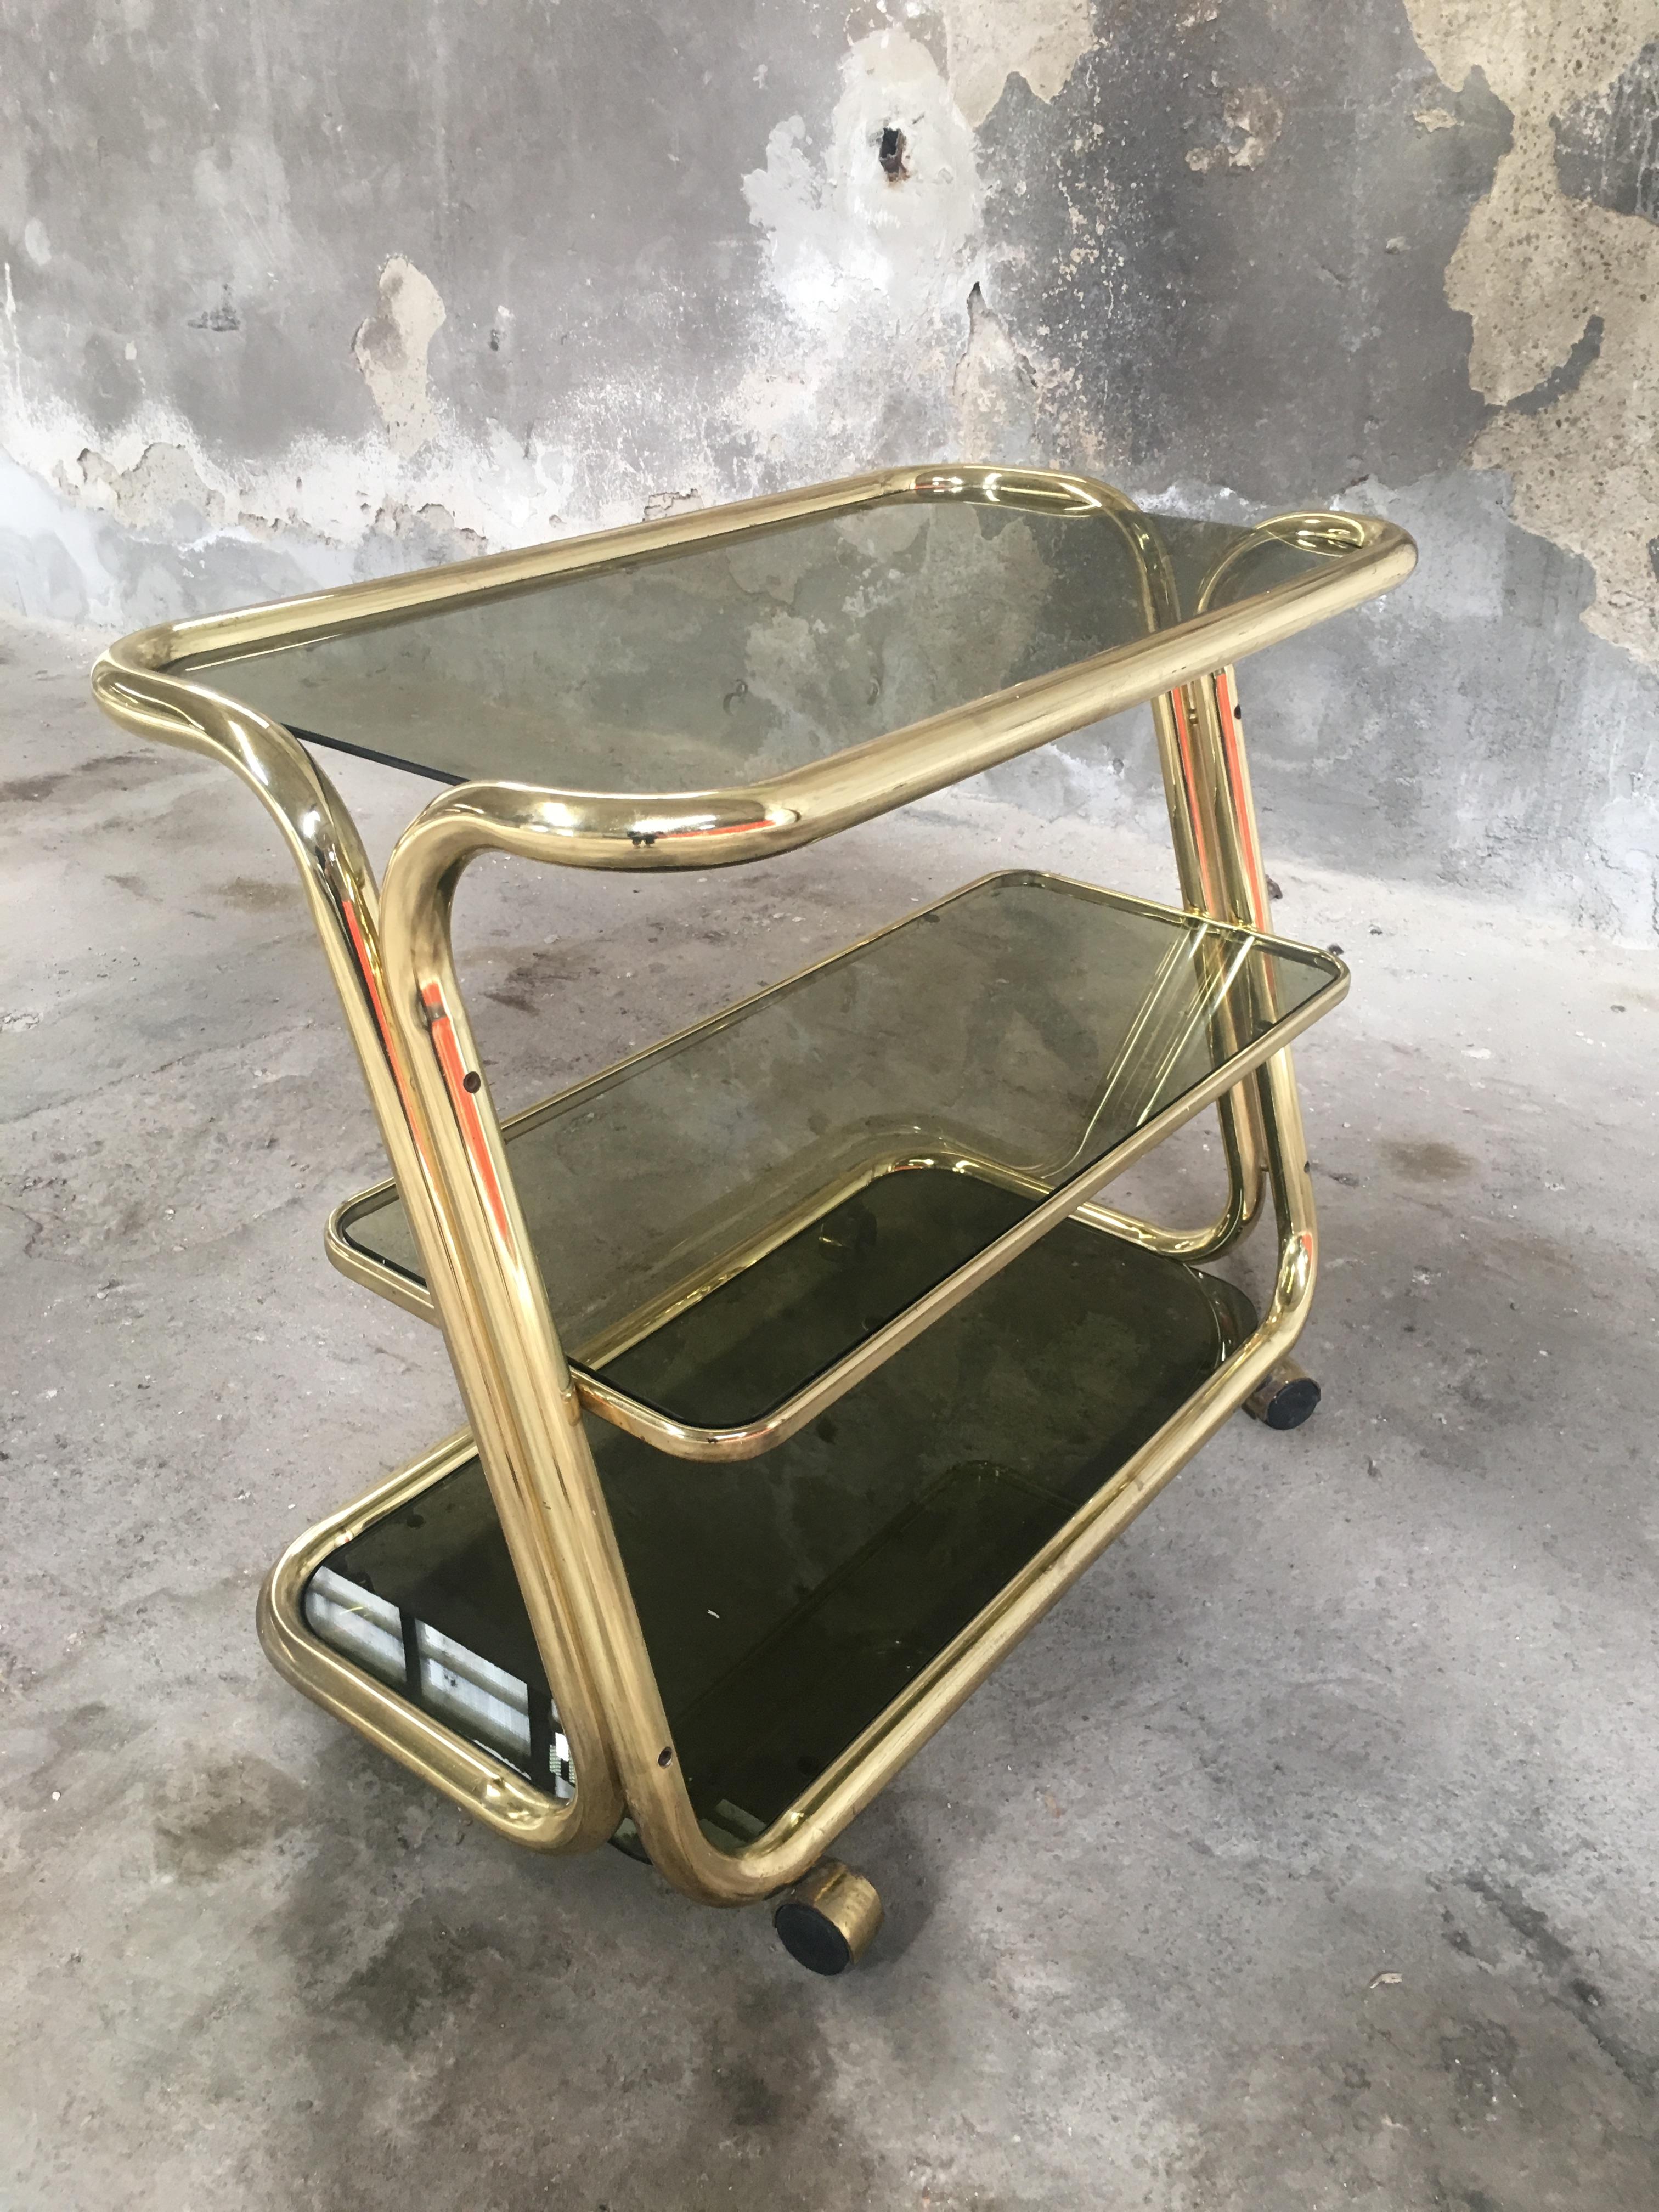 Mid-Century Modern Italian gilt metal bar cart or étagère on wheels with smoked glass shelves.